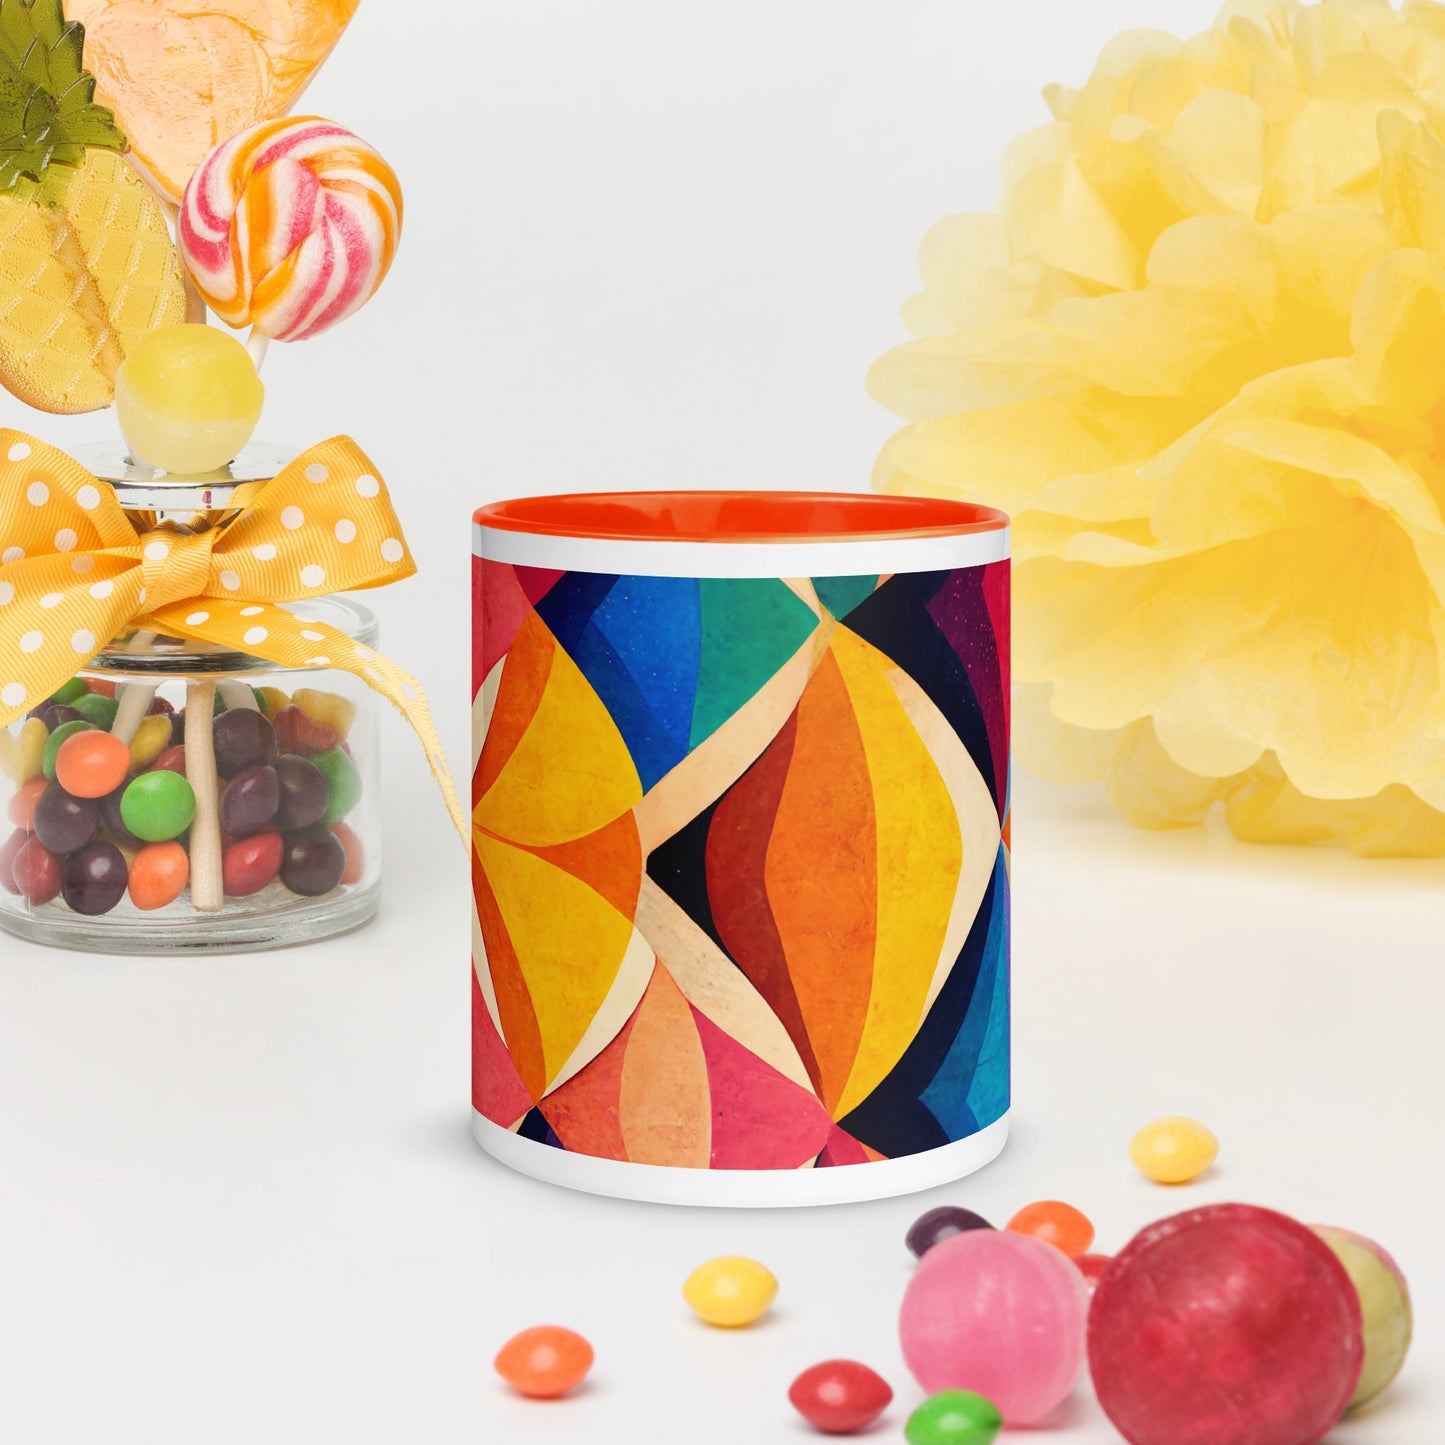 Symmetrical Illusion Ceramic Mug with Color Inside